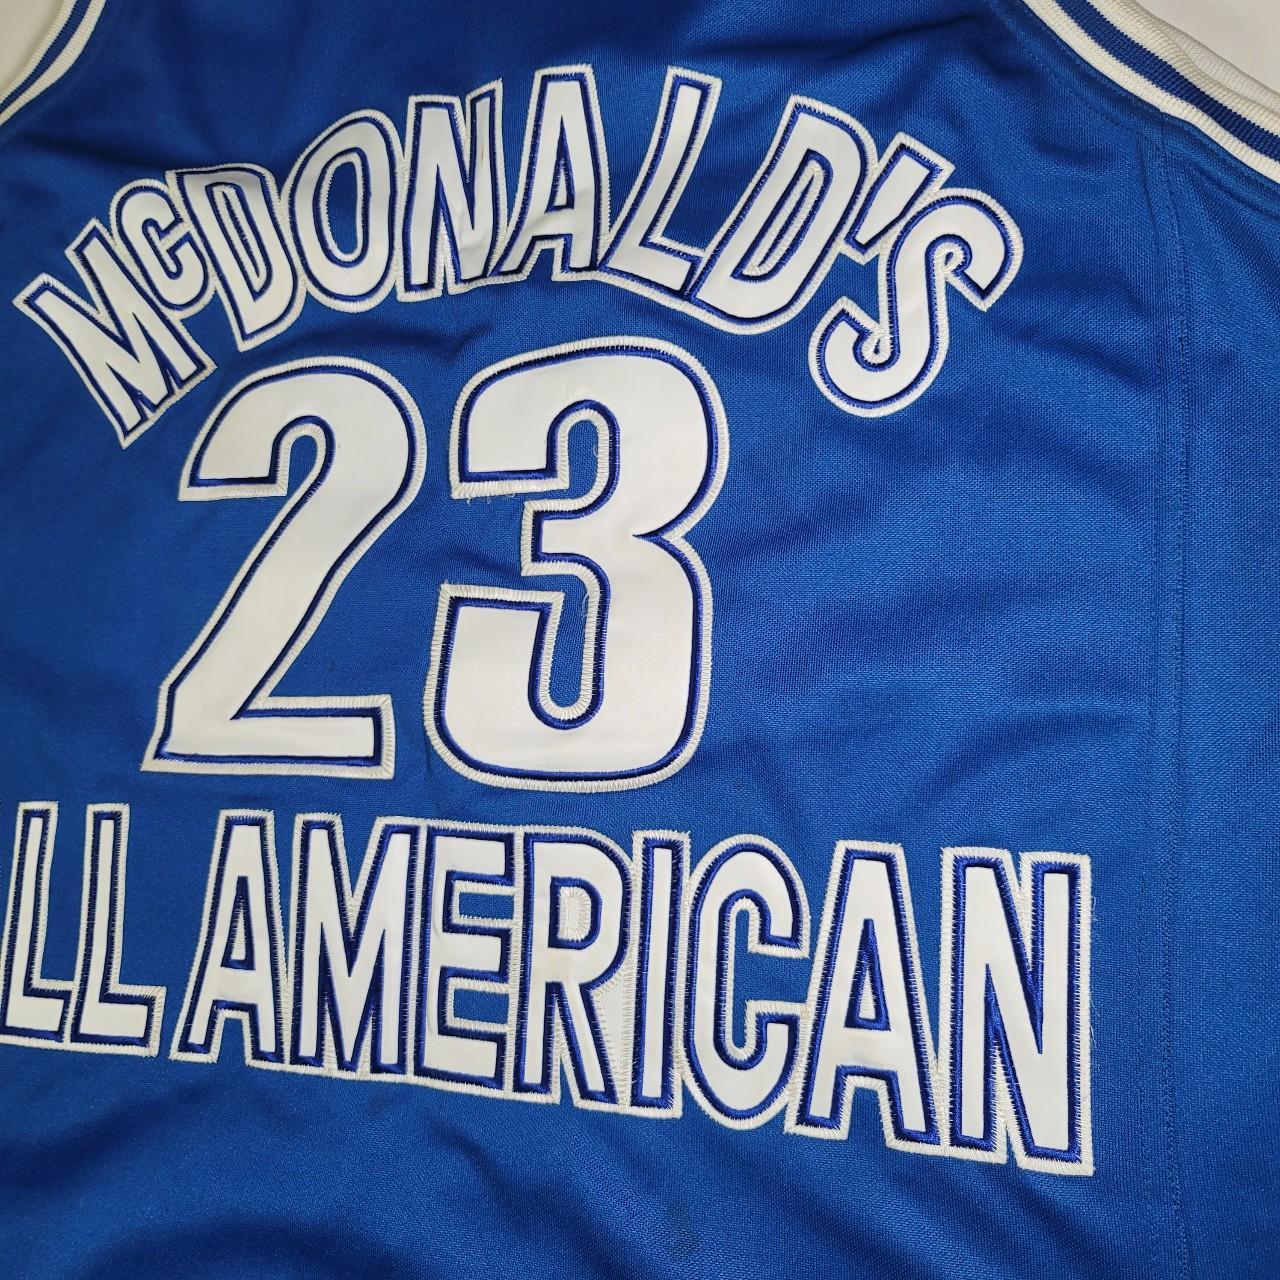 Basketball Jerseys Michael Jordan #23 Mcdonald's All American Jersey Blue